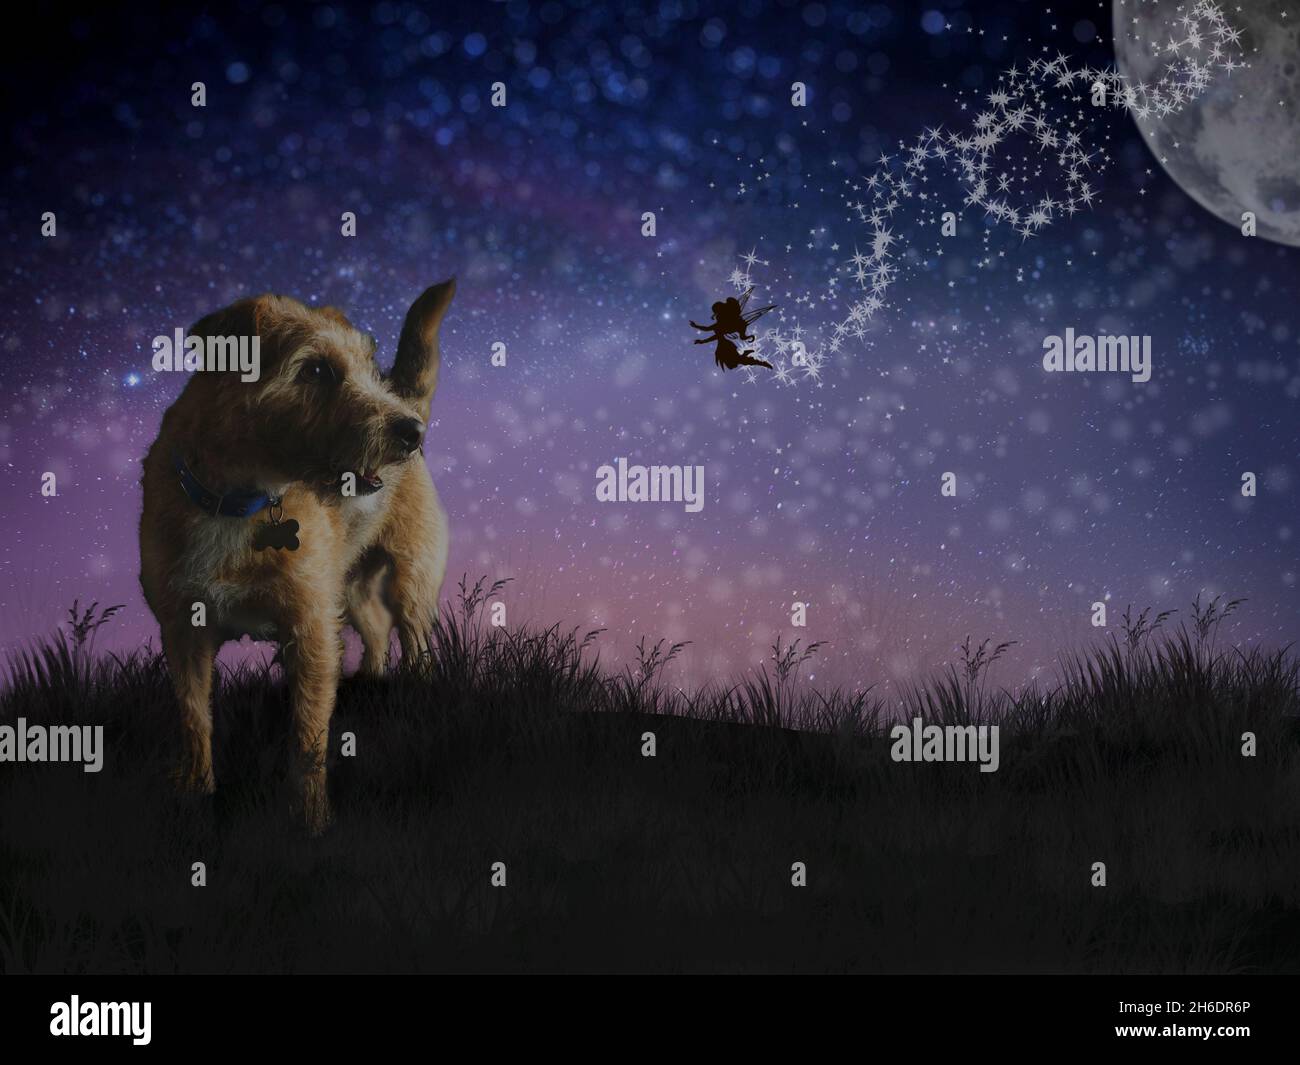 Fantasy Image Of Small Dog And Fairy Stock Photo Alamy